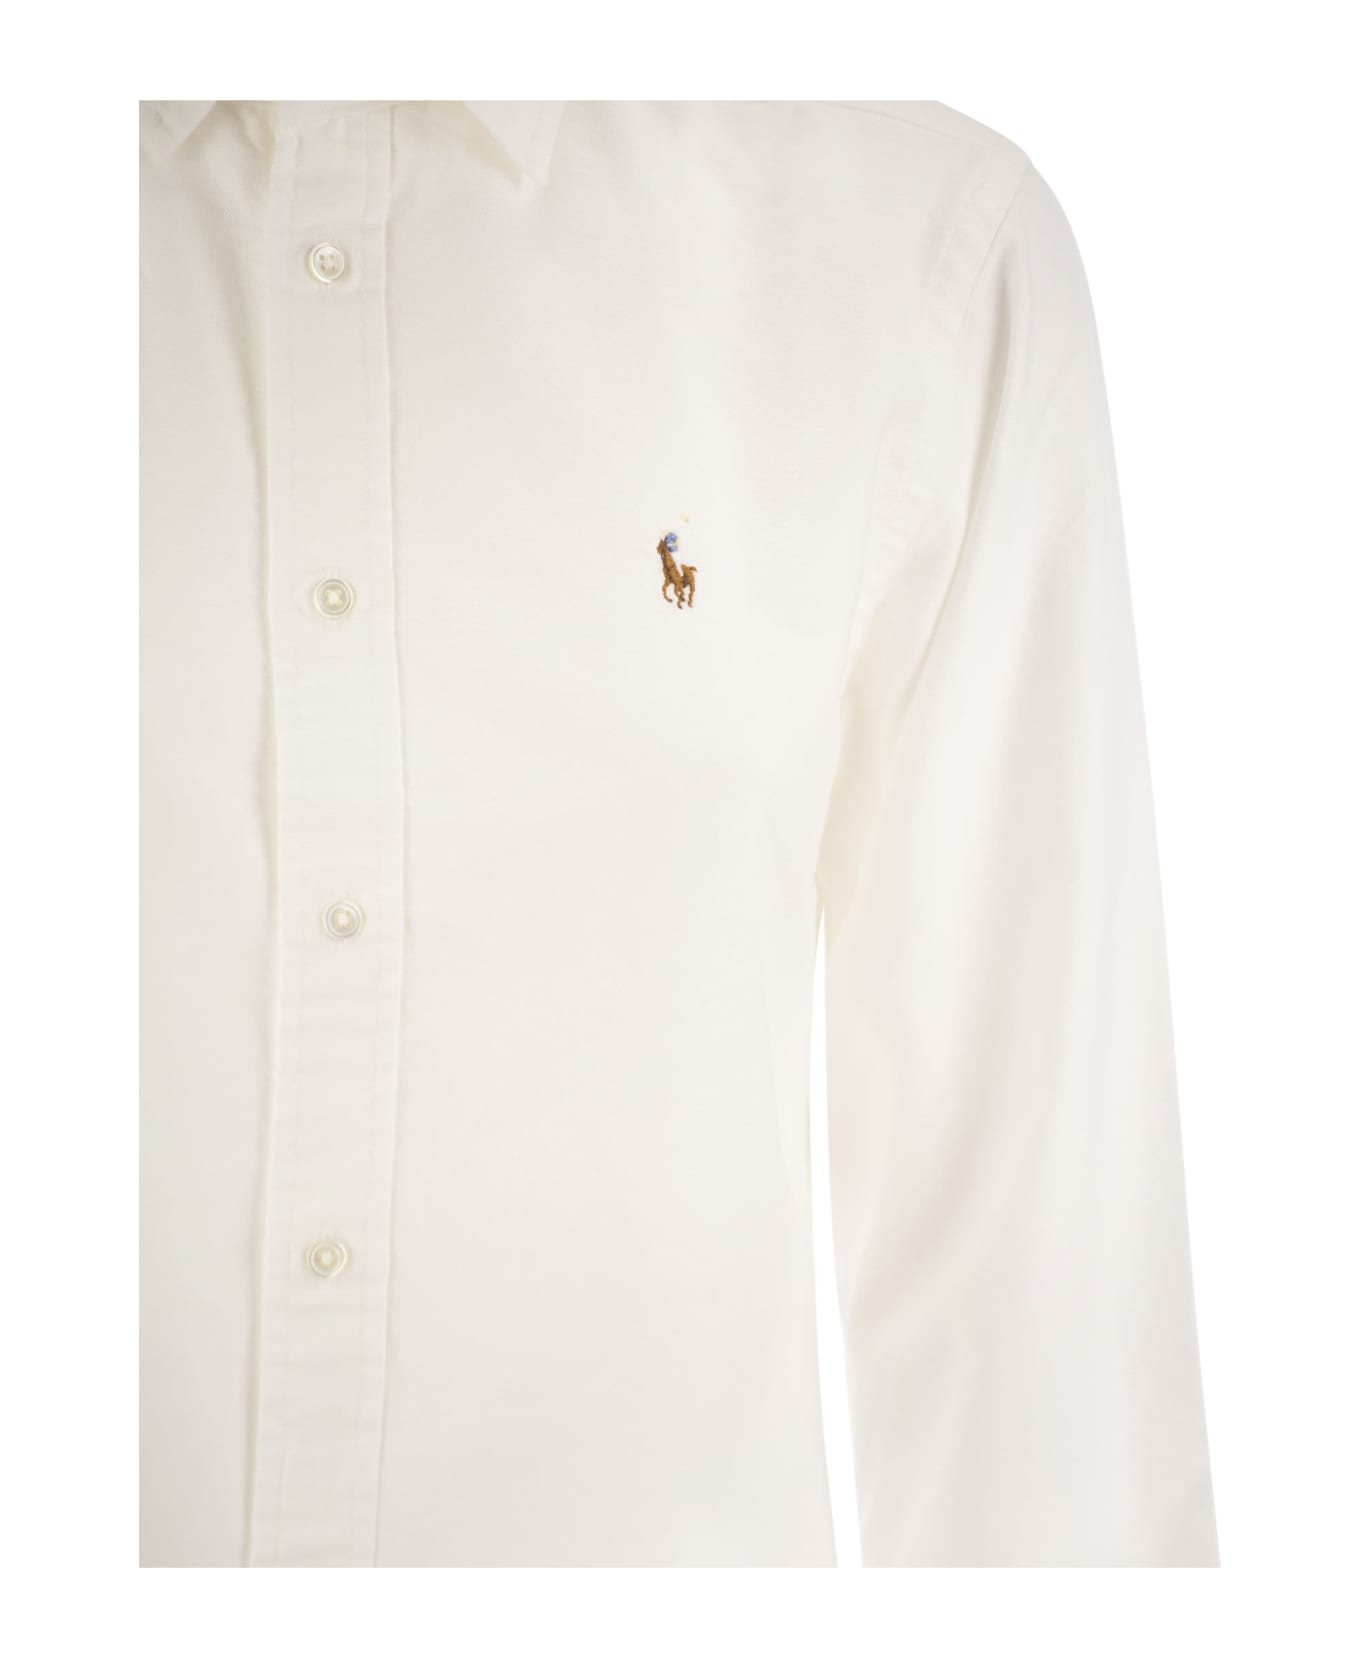 Polo Ralph Lauren White Oxford Shirt - 003